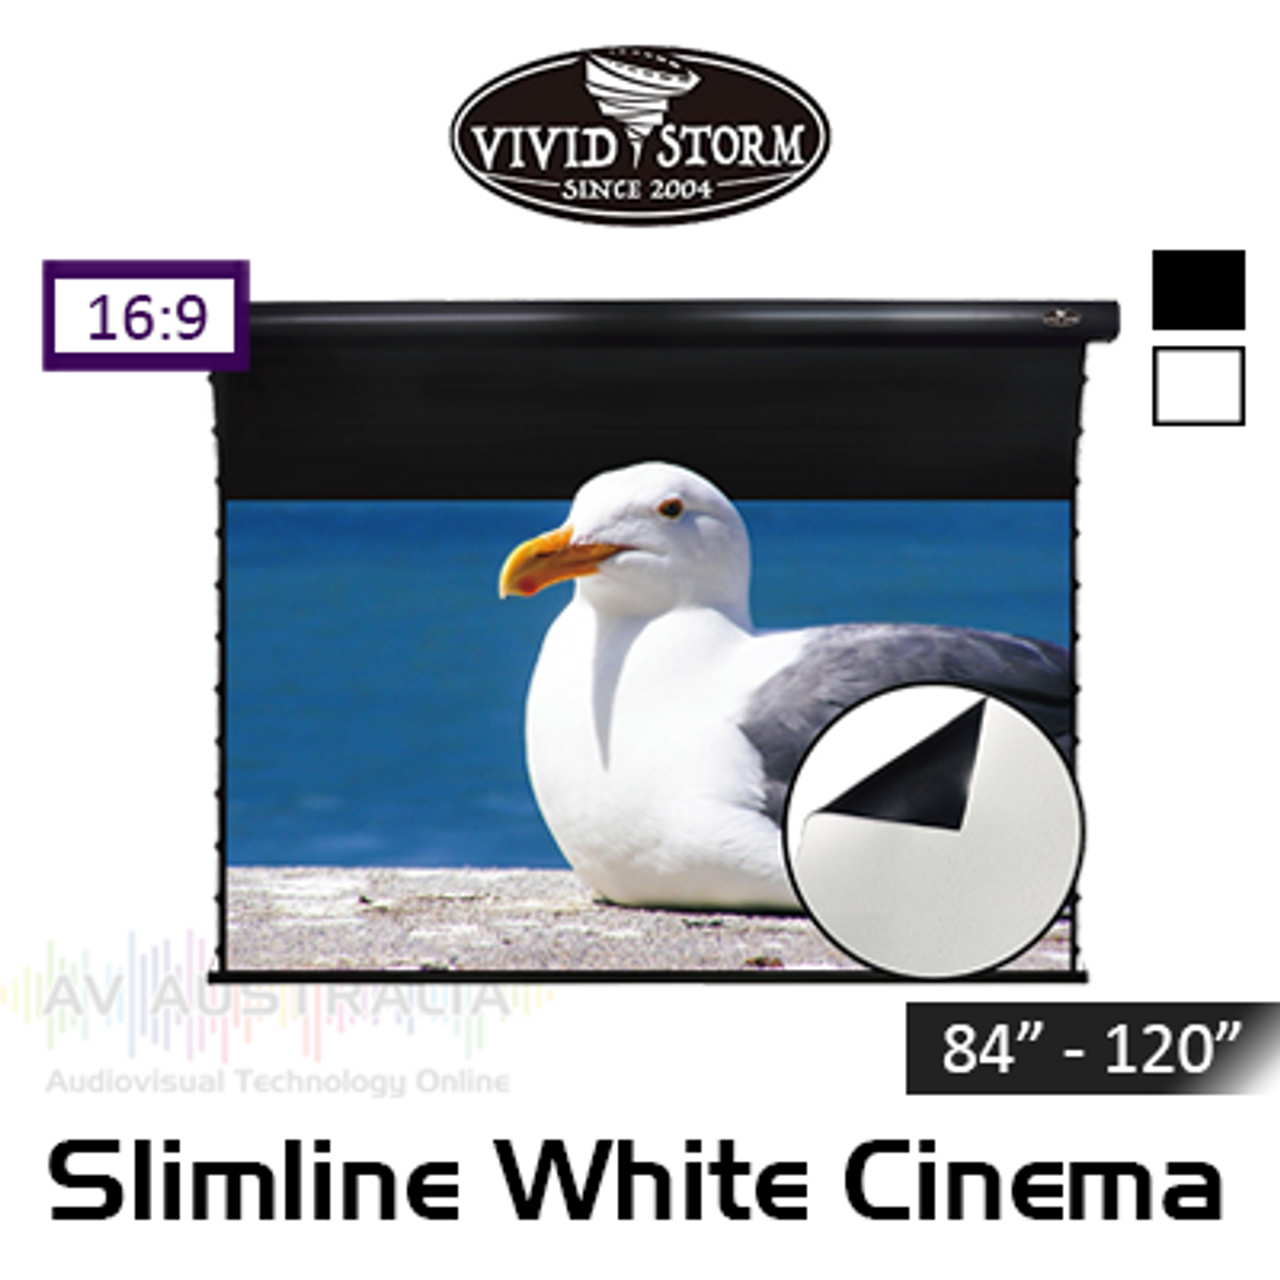 Vividstorm Slimline White Cinema Tab-Tension Motorised Projection Screens (84" - 120")